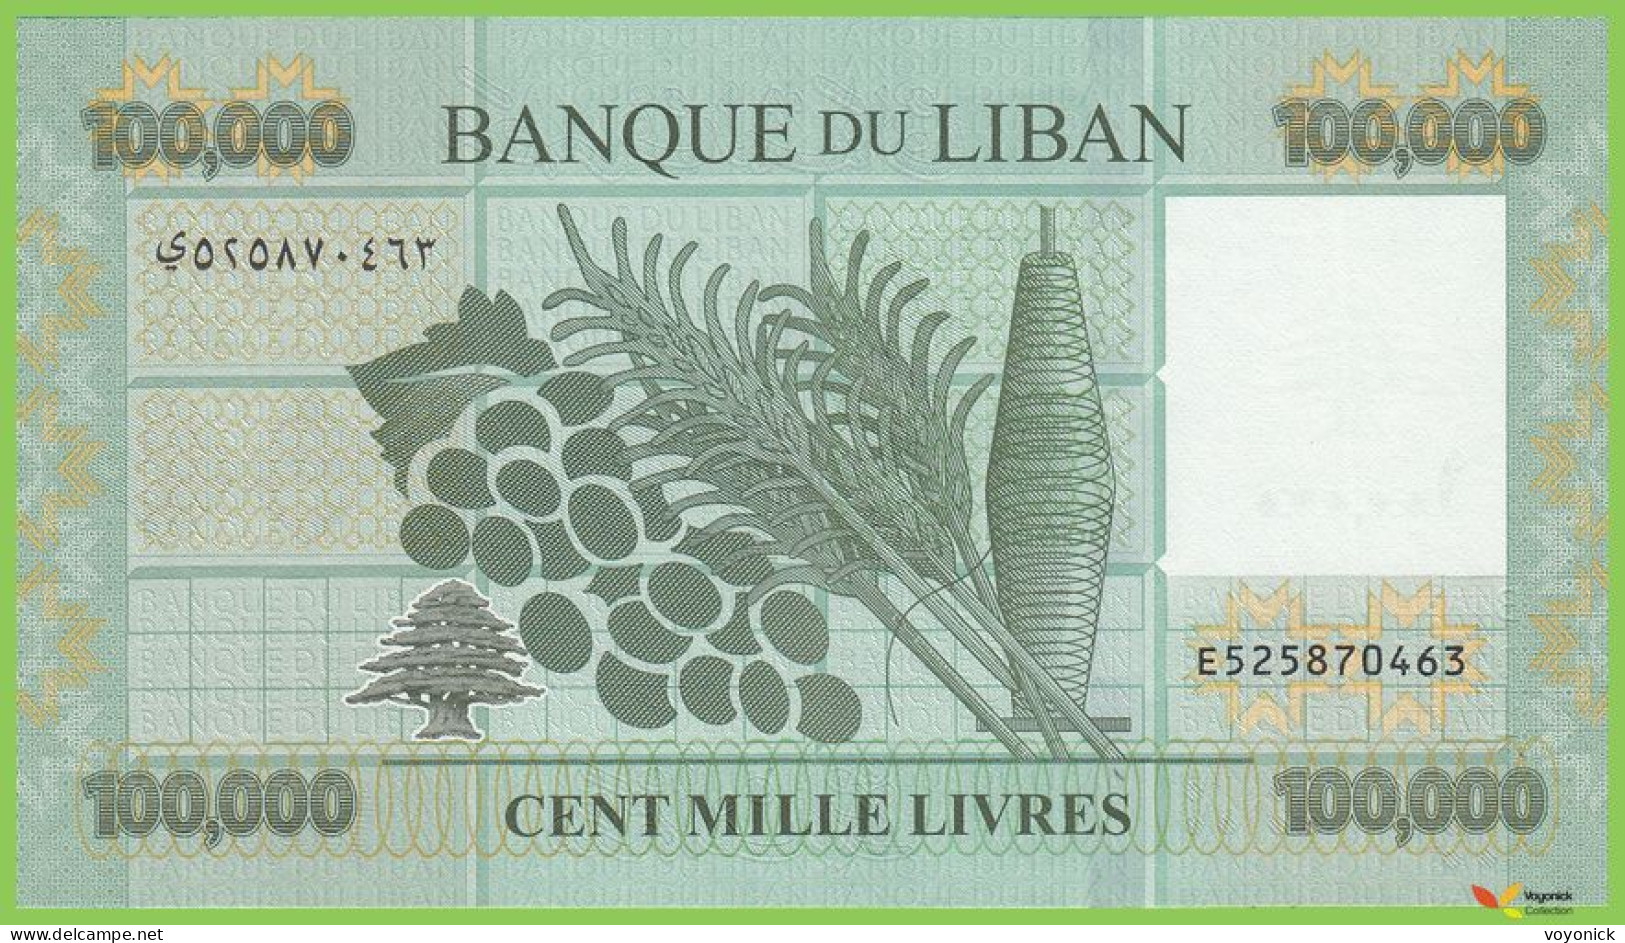 Voyo LEBANON 100000 LIVRES 2020 P95d B546b E52 UNC - Lebanon